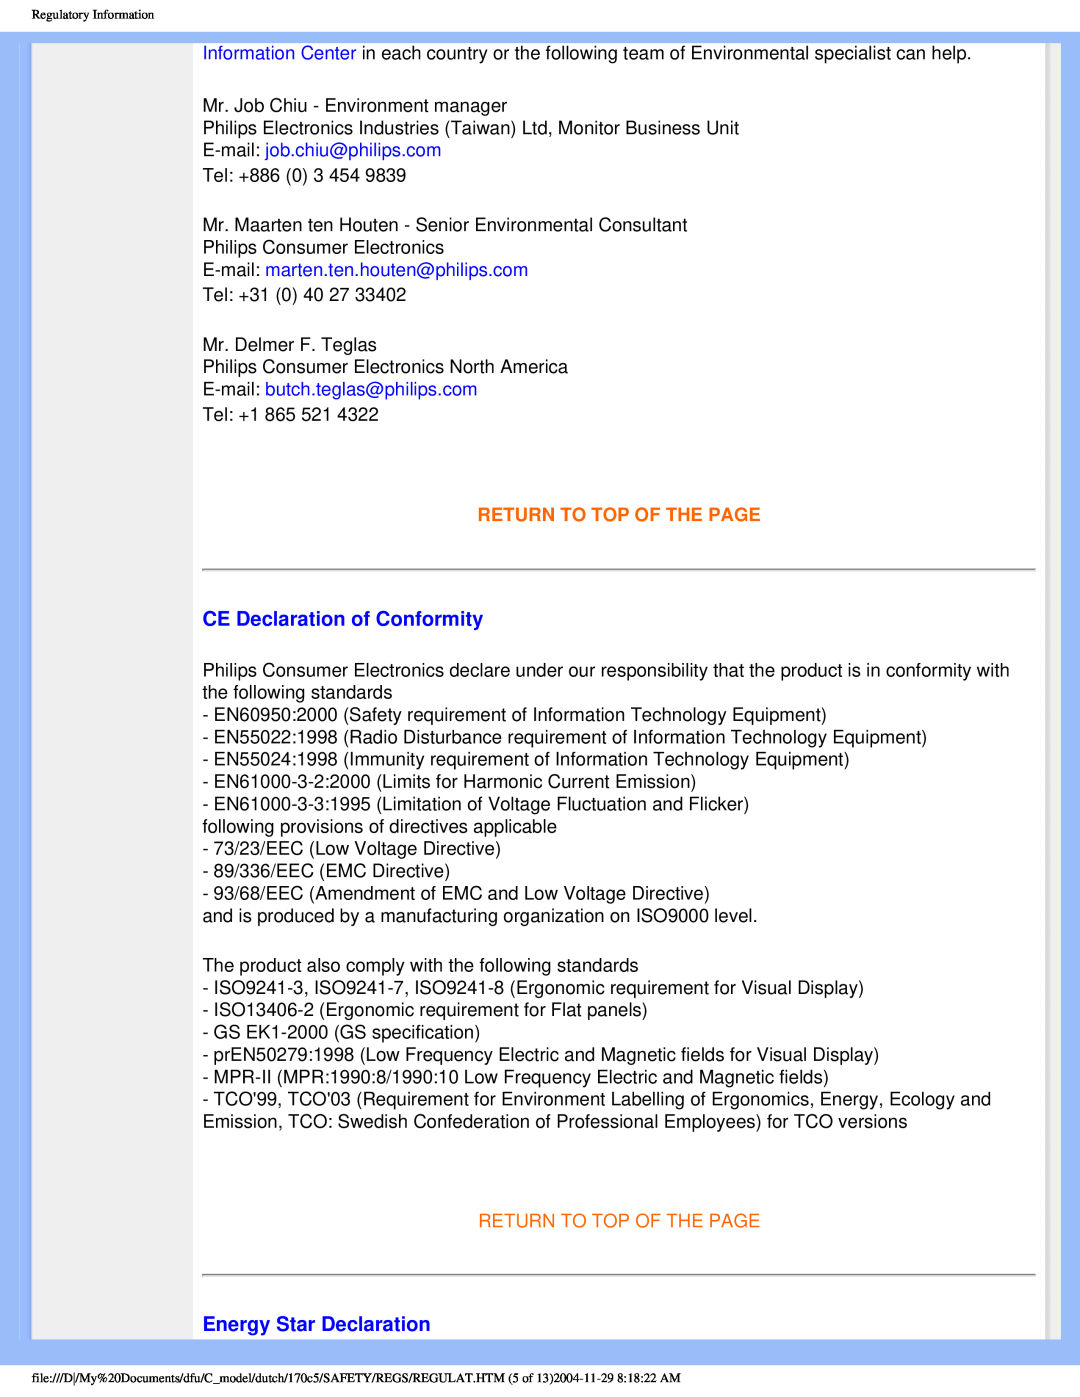 Philips 170C5 user manual CE Declaration of Conformity, Energy Star Declaration, E-mail job.chiu@philips.com 